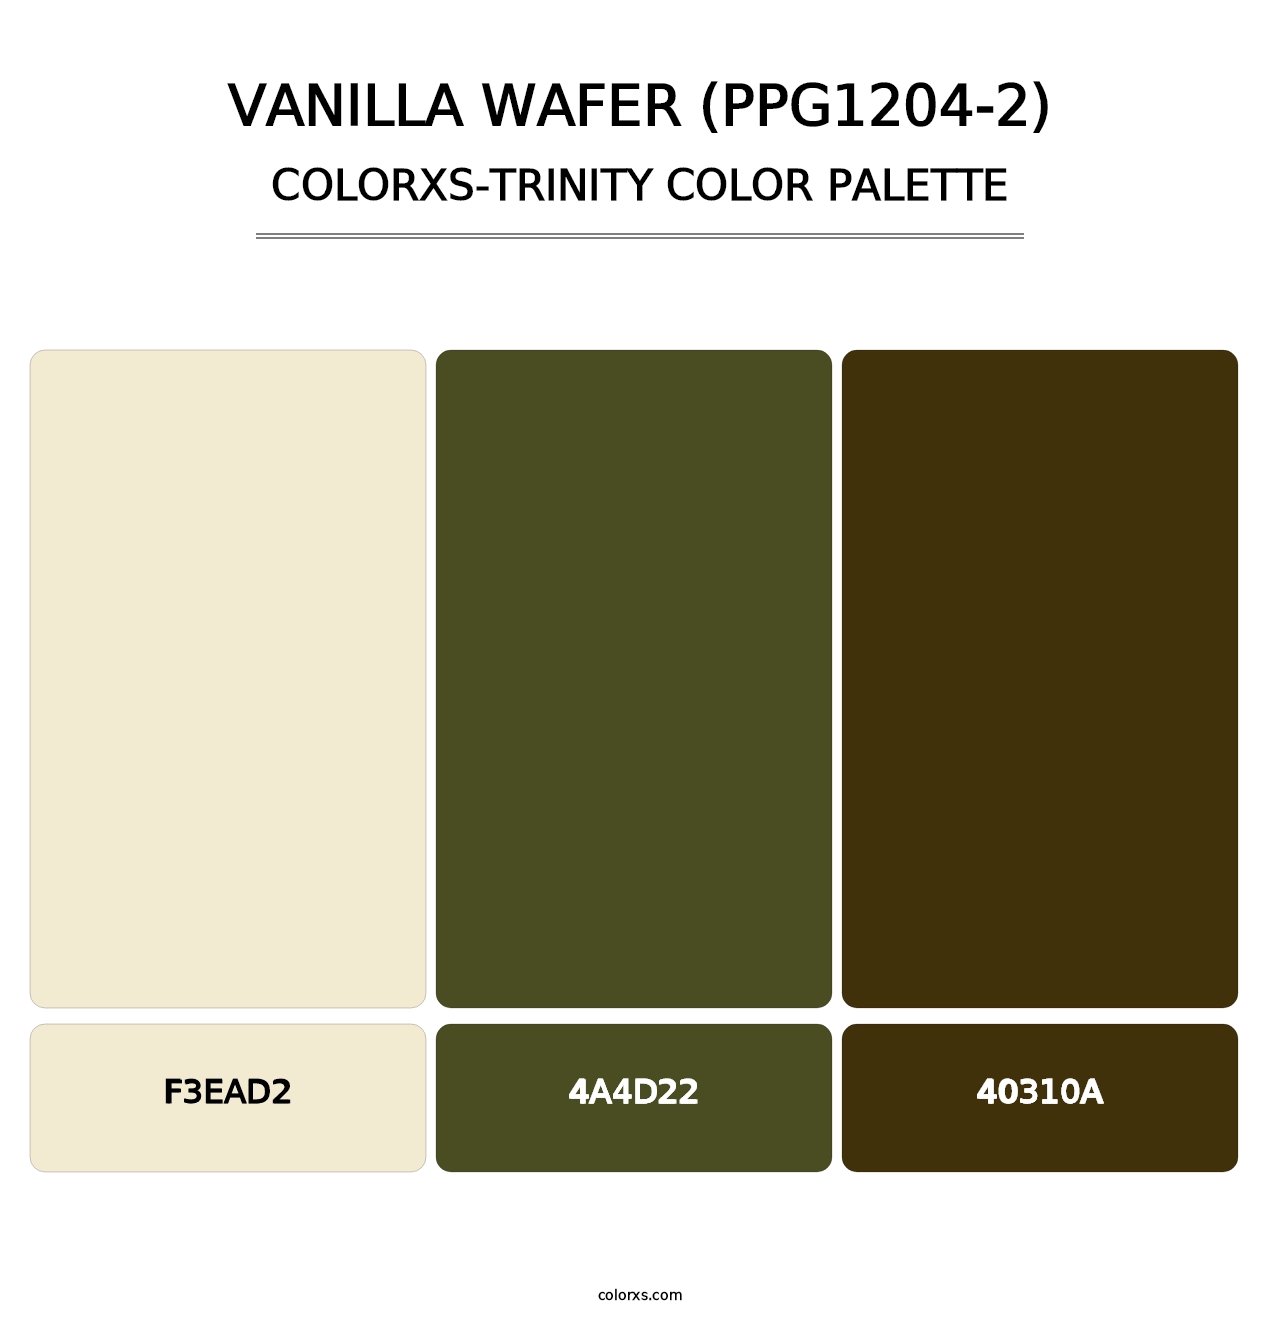 Vanilla Wafer (PPG1204-2) - Colorxs Trinity Palette